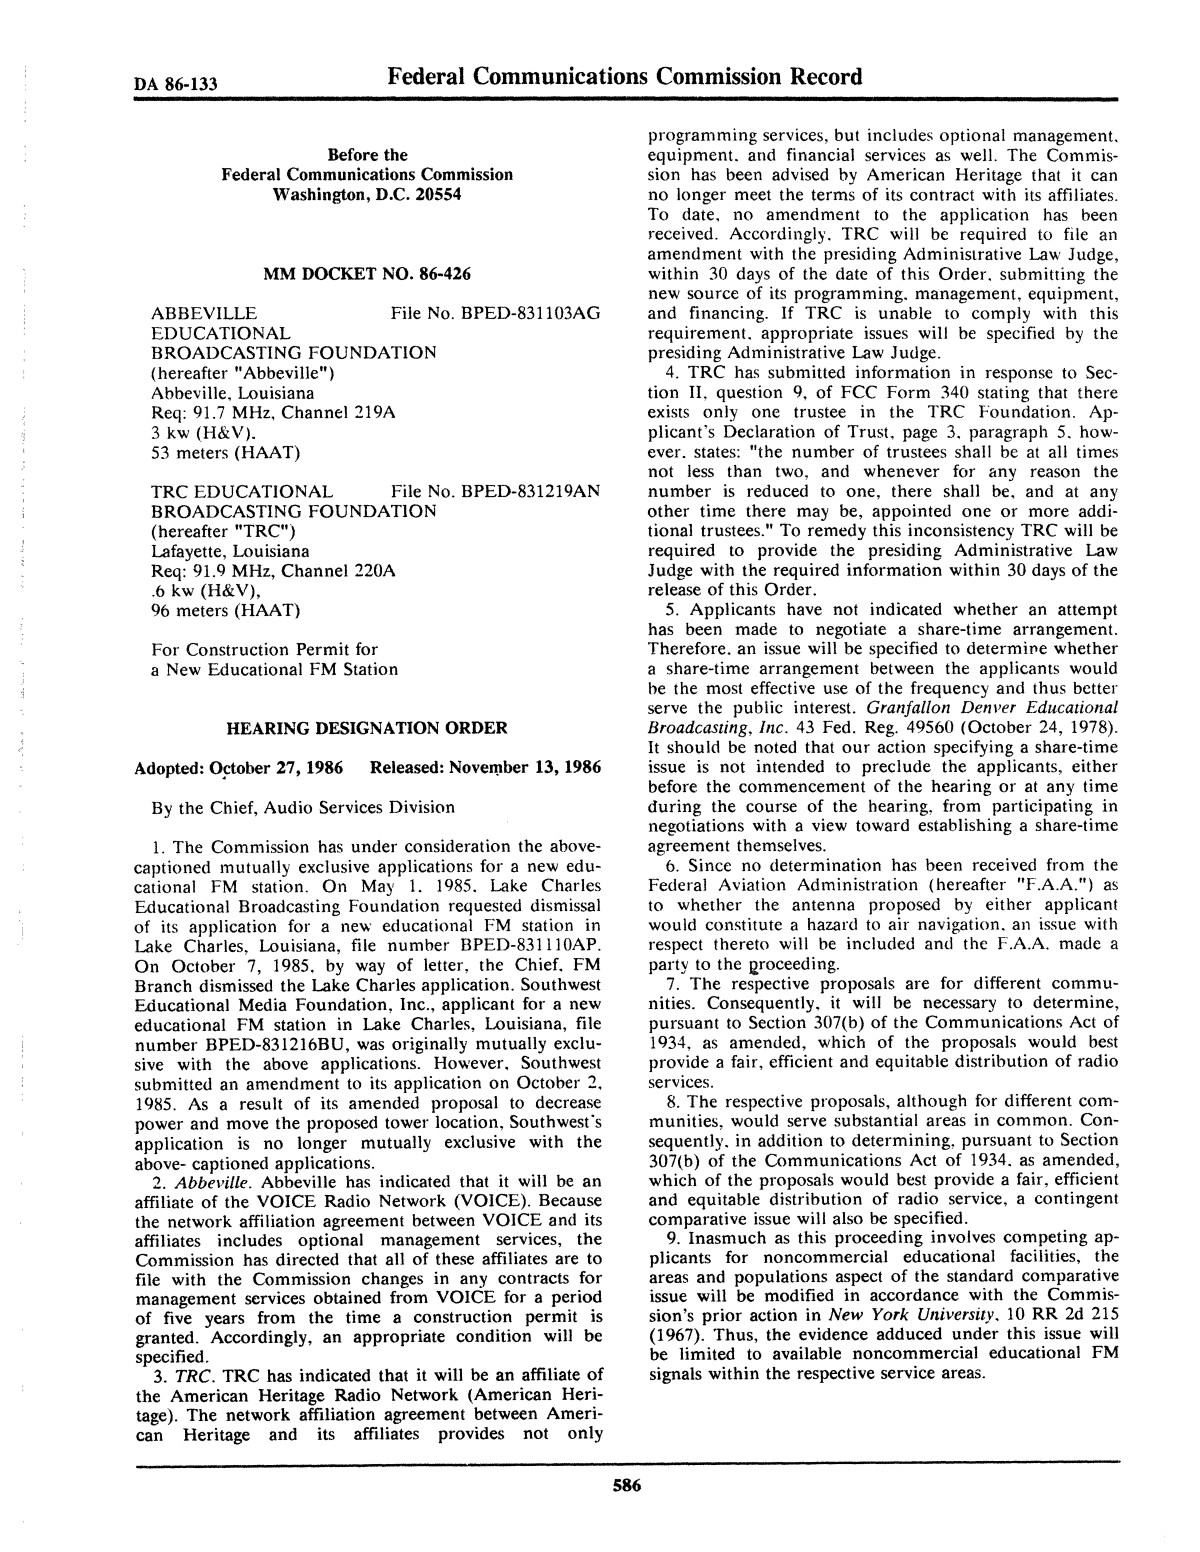 FCC Record, Volume 1, No. 4, Pages 549 to 785, November 10 - November 21, 1986
                                                
                                                    586
                                                